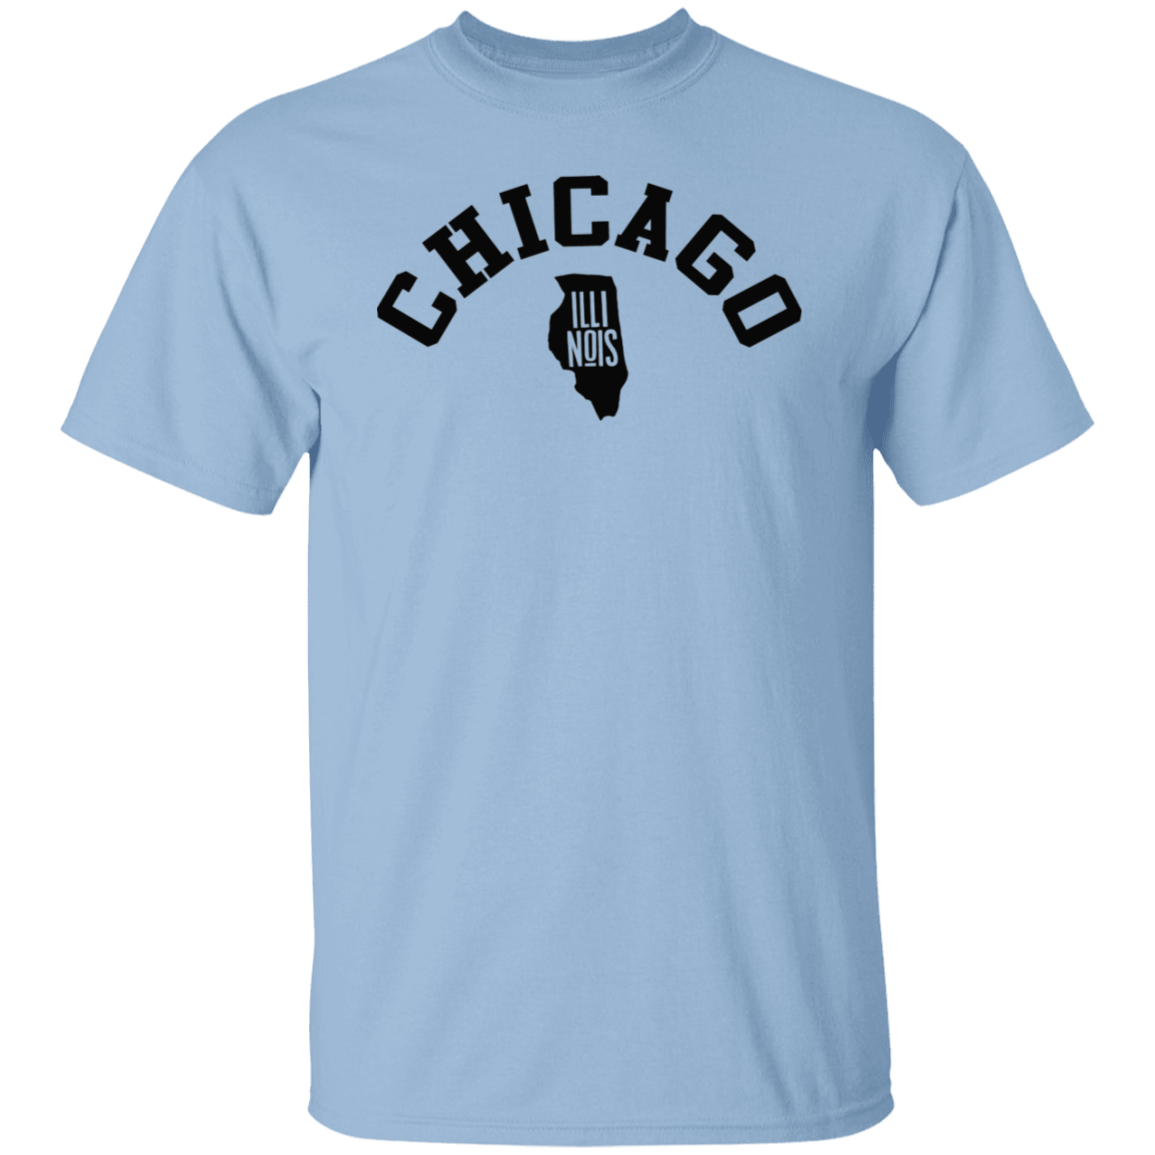 Chicago Illinois Circular Black Print T-Shirt